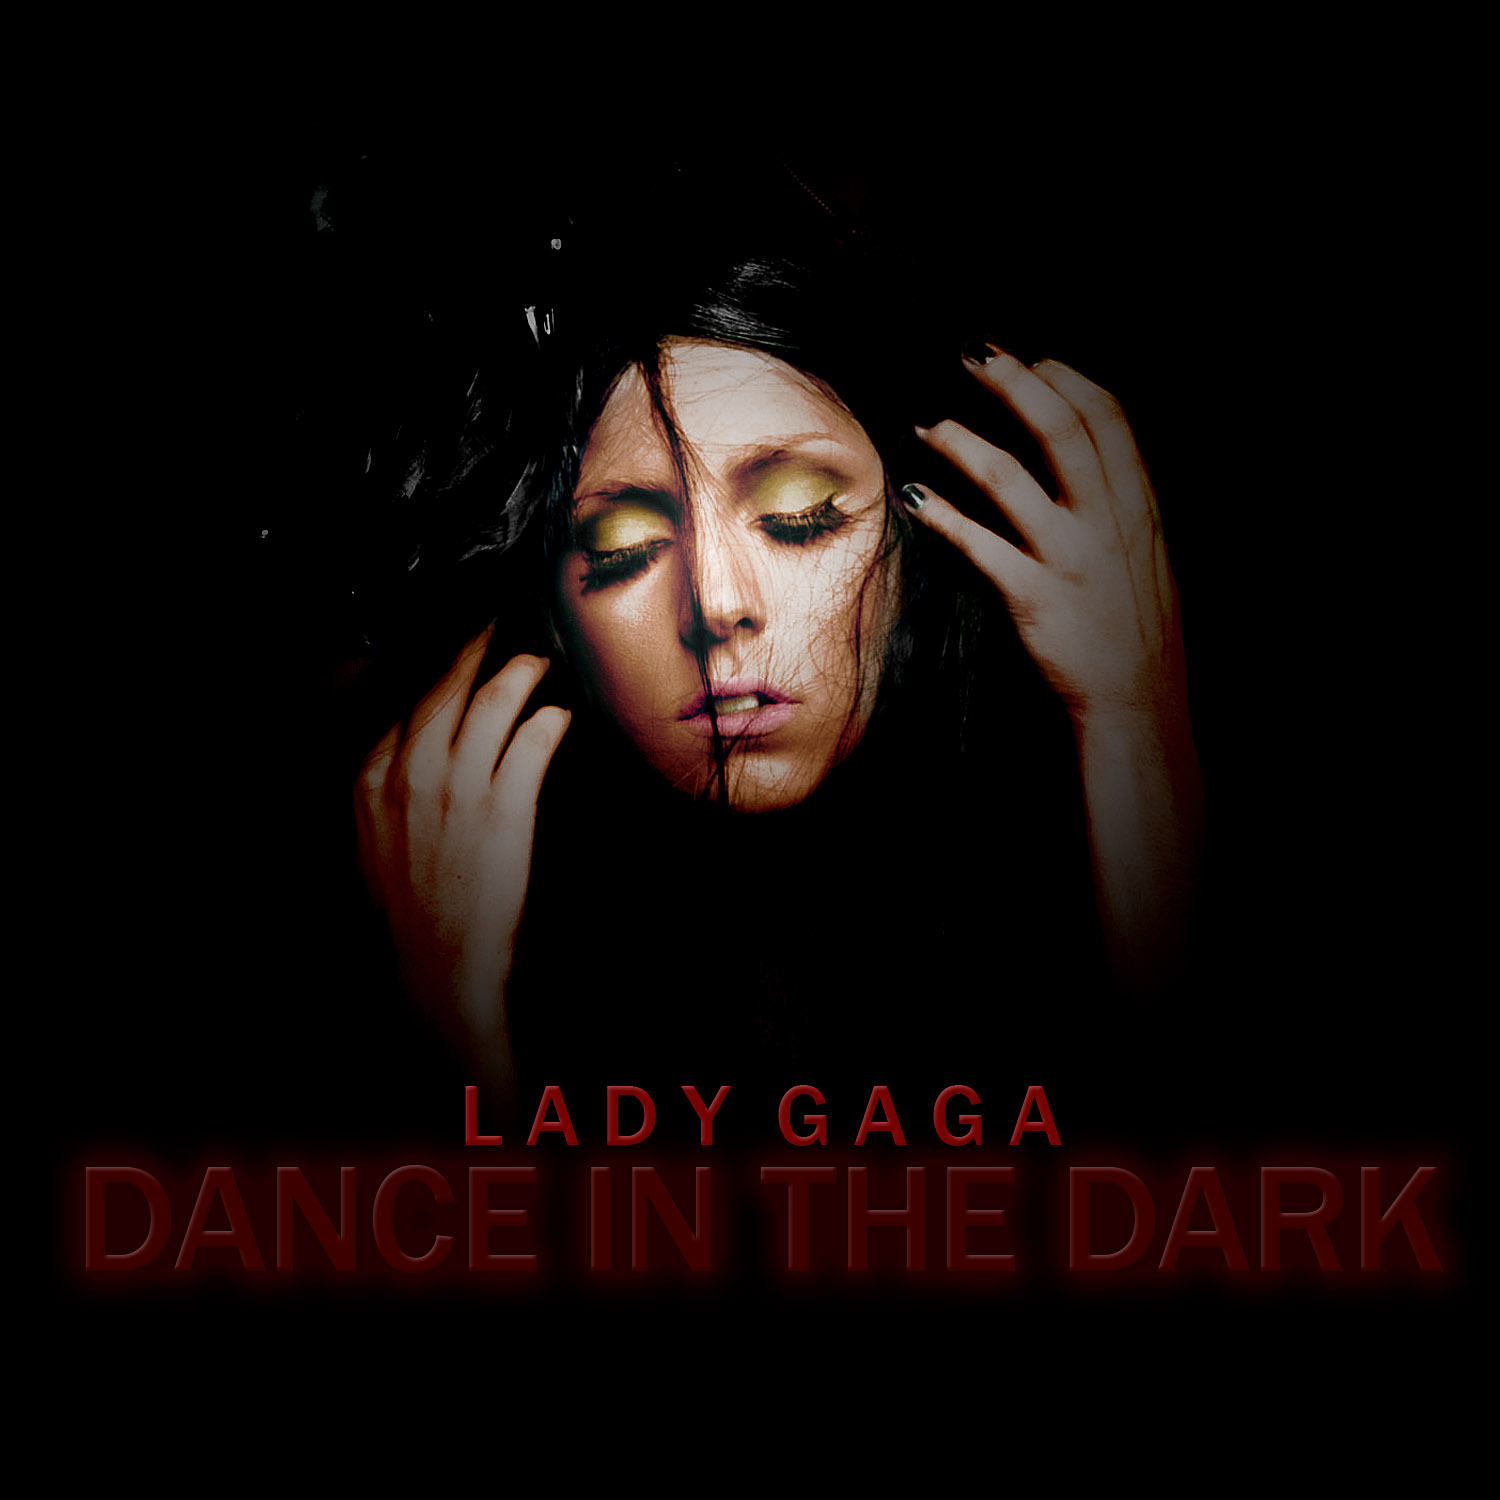 Леди гага дэнс. Lady Gaga Dance in the Dark. Dark Gaga. Lady Gaga - Dance in the Dark Single.